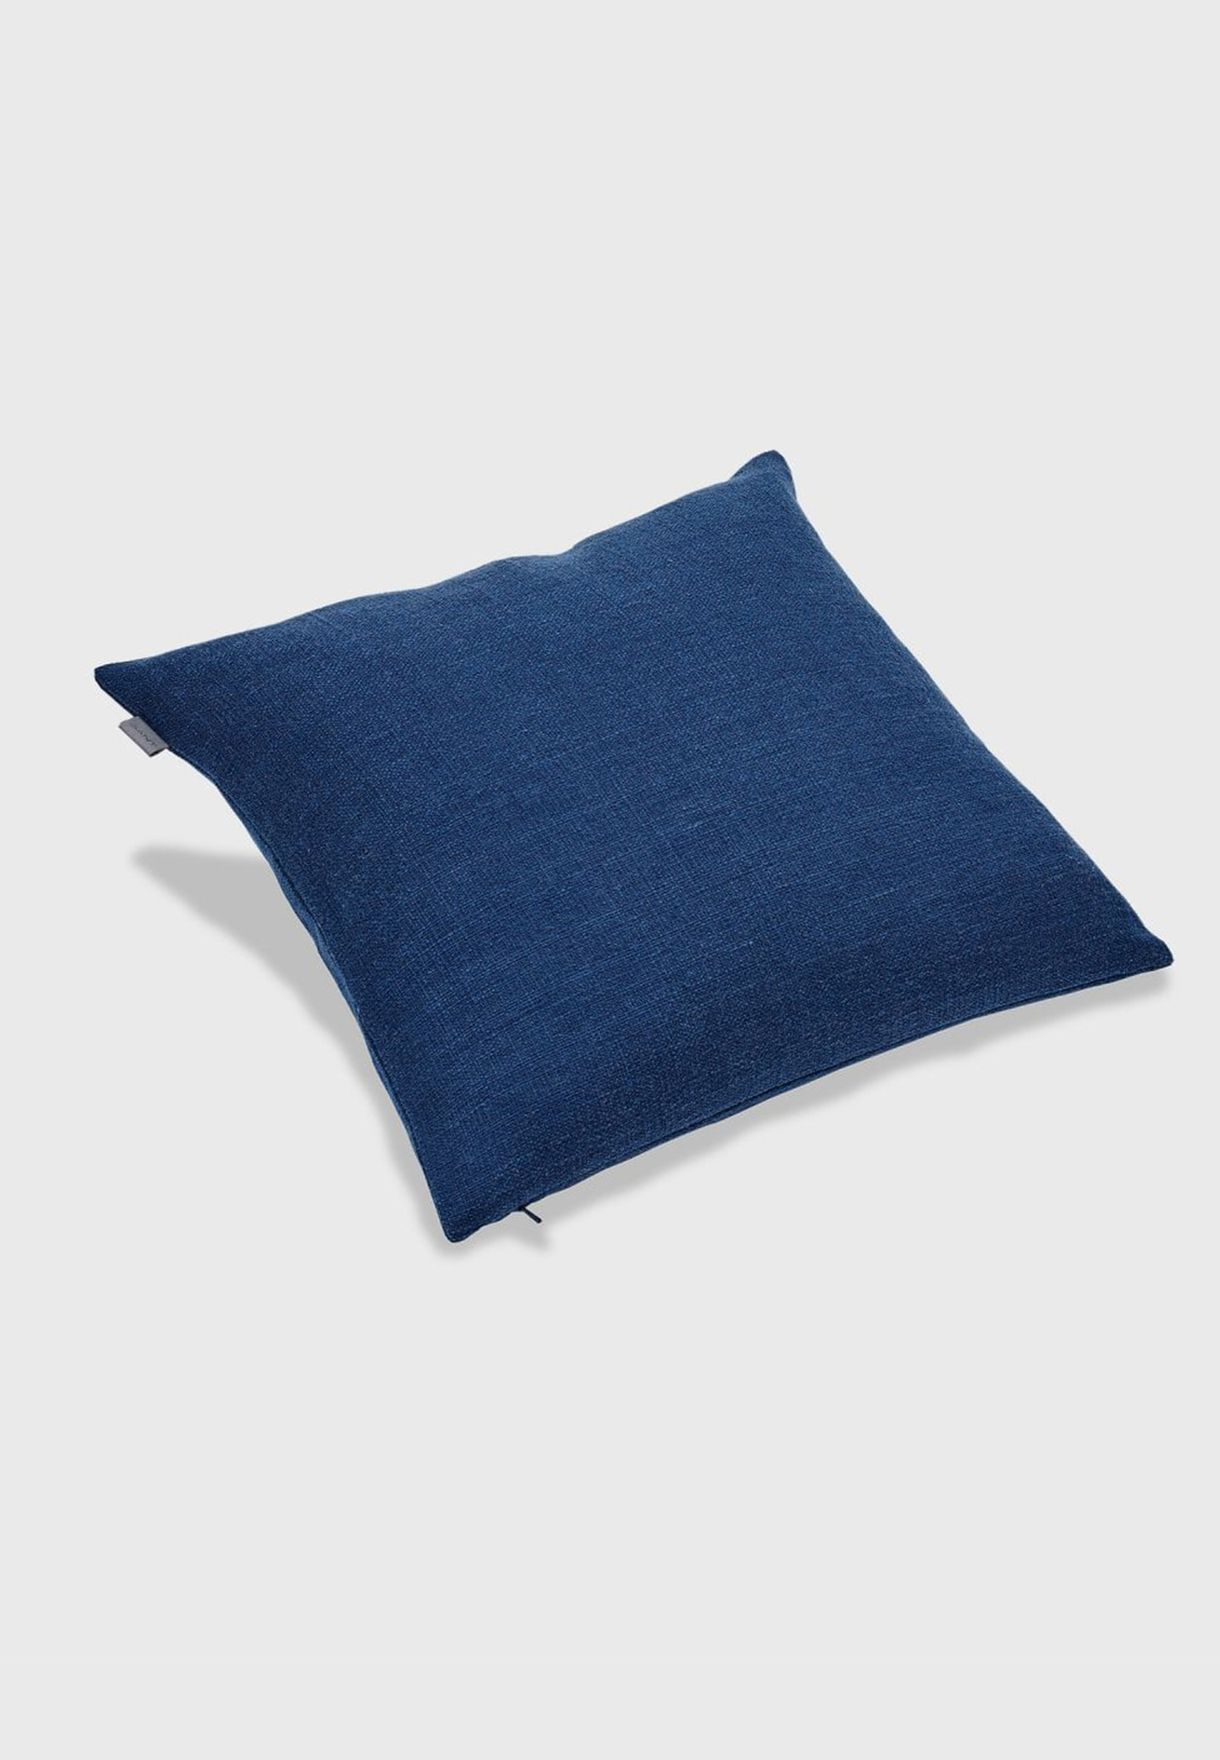 Square Sateen Blue Fellow Cushion Cover